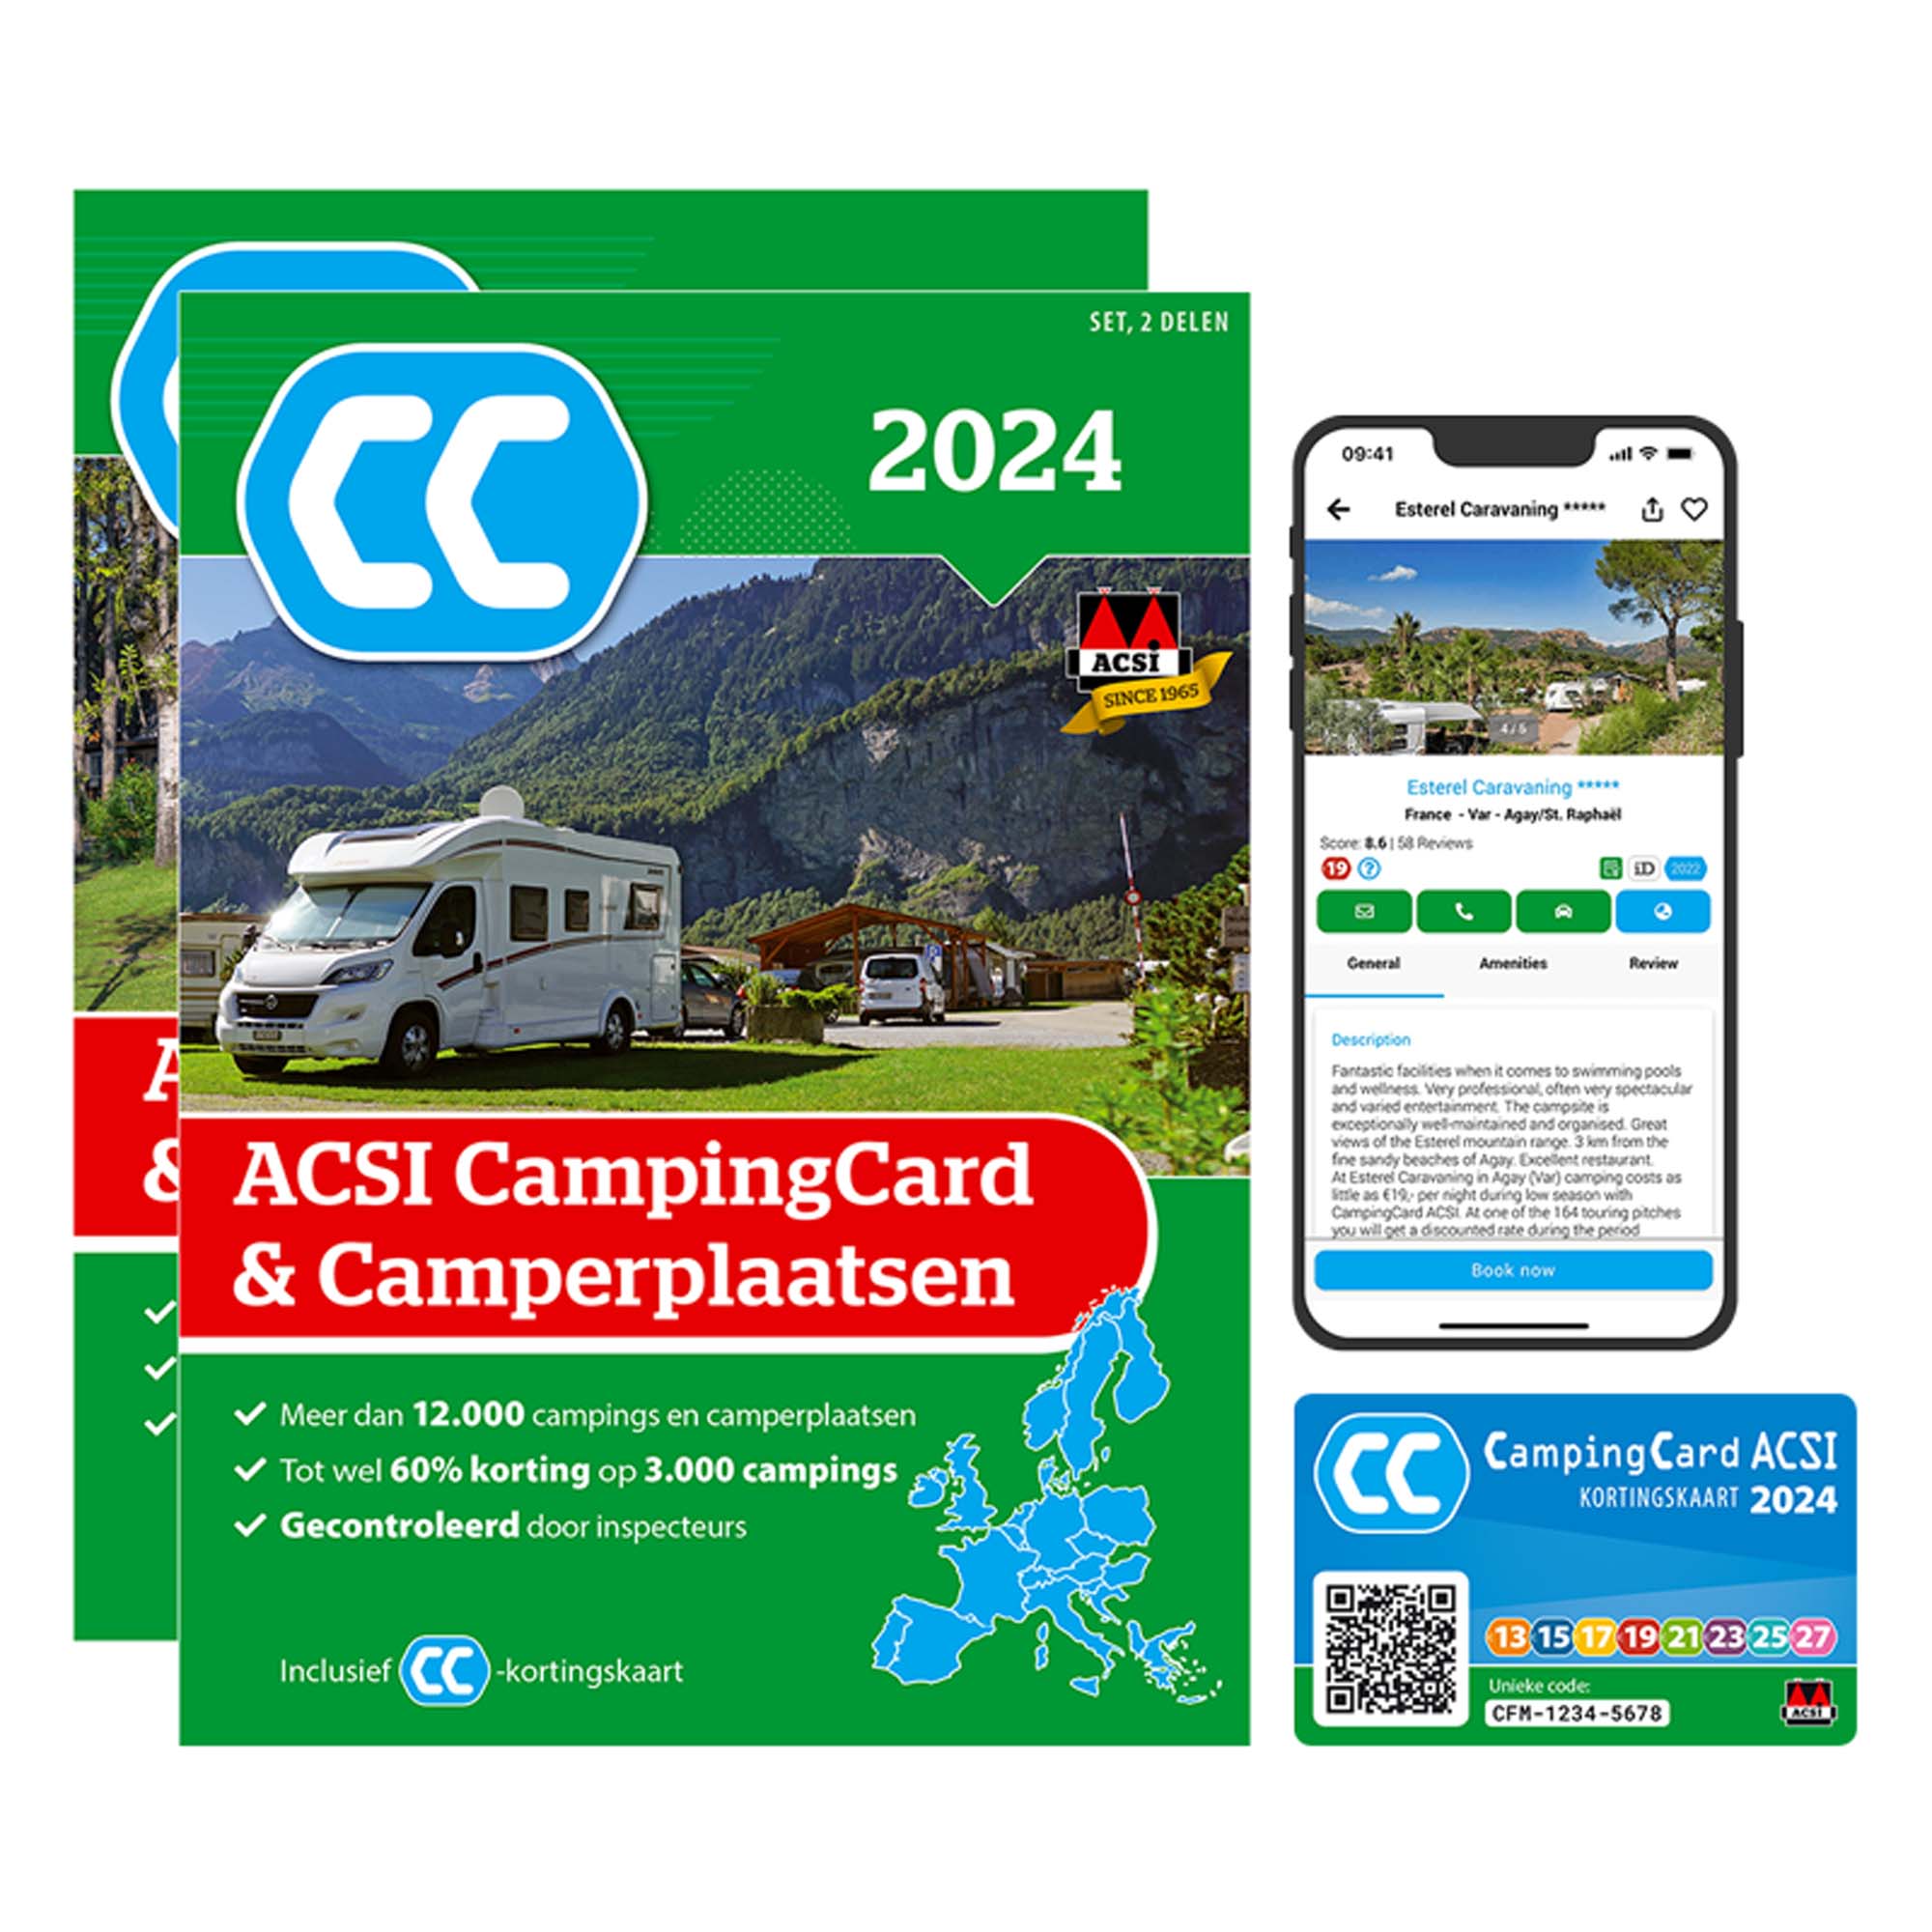 ACSI campingcard & camperplaatsen 2024